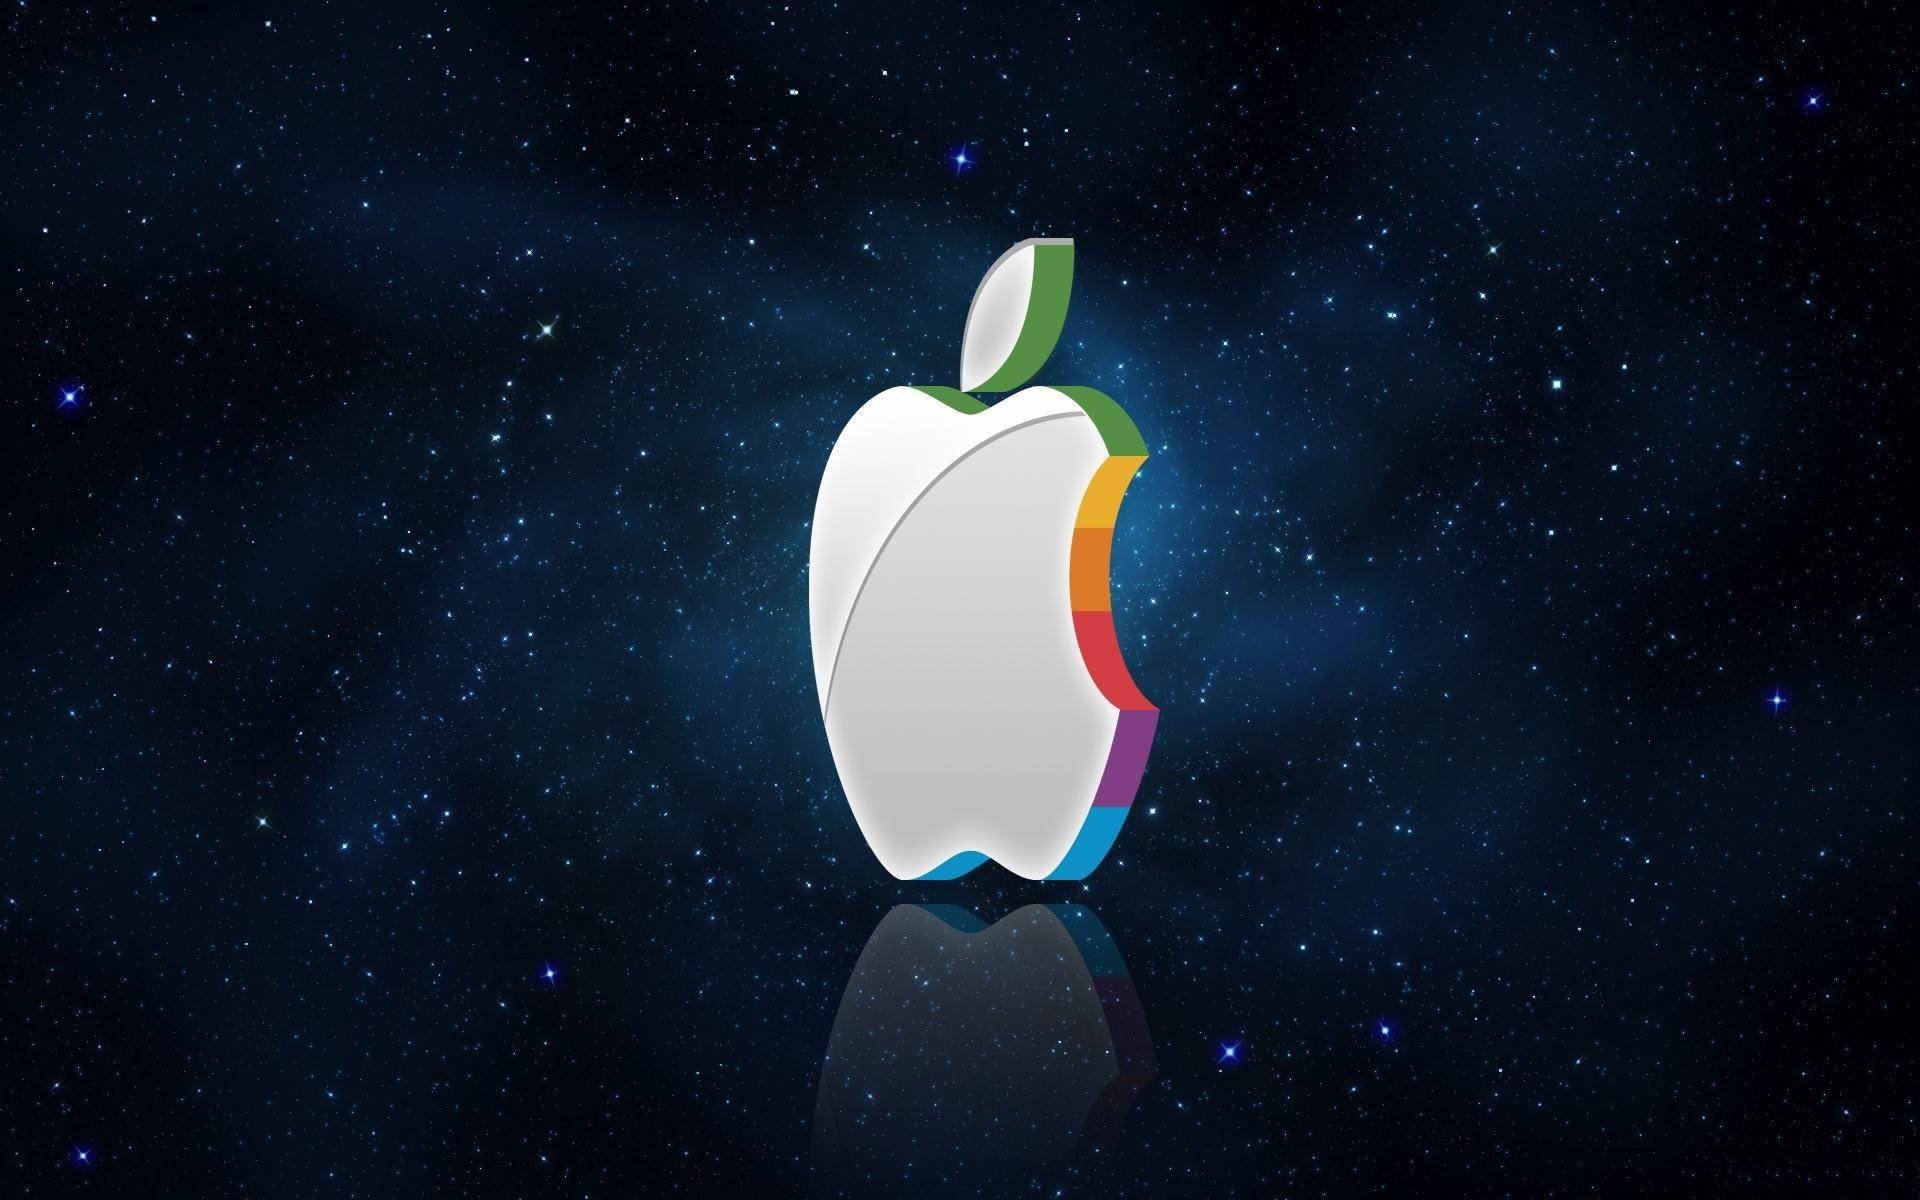 Caption: Compelling Blue Apple Logo Image Wallpaper